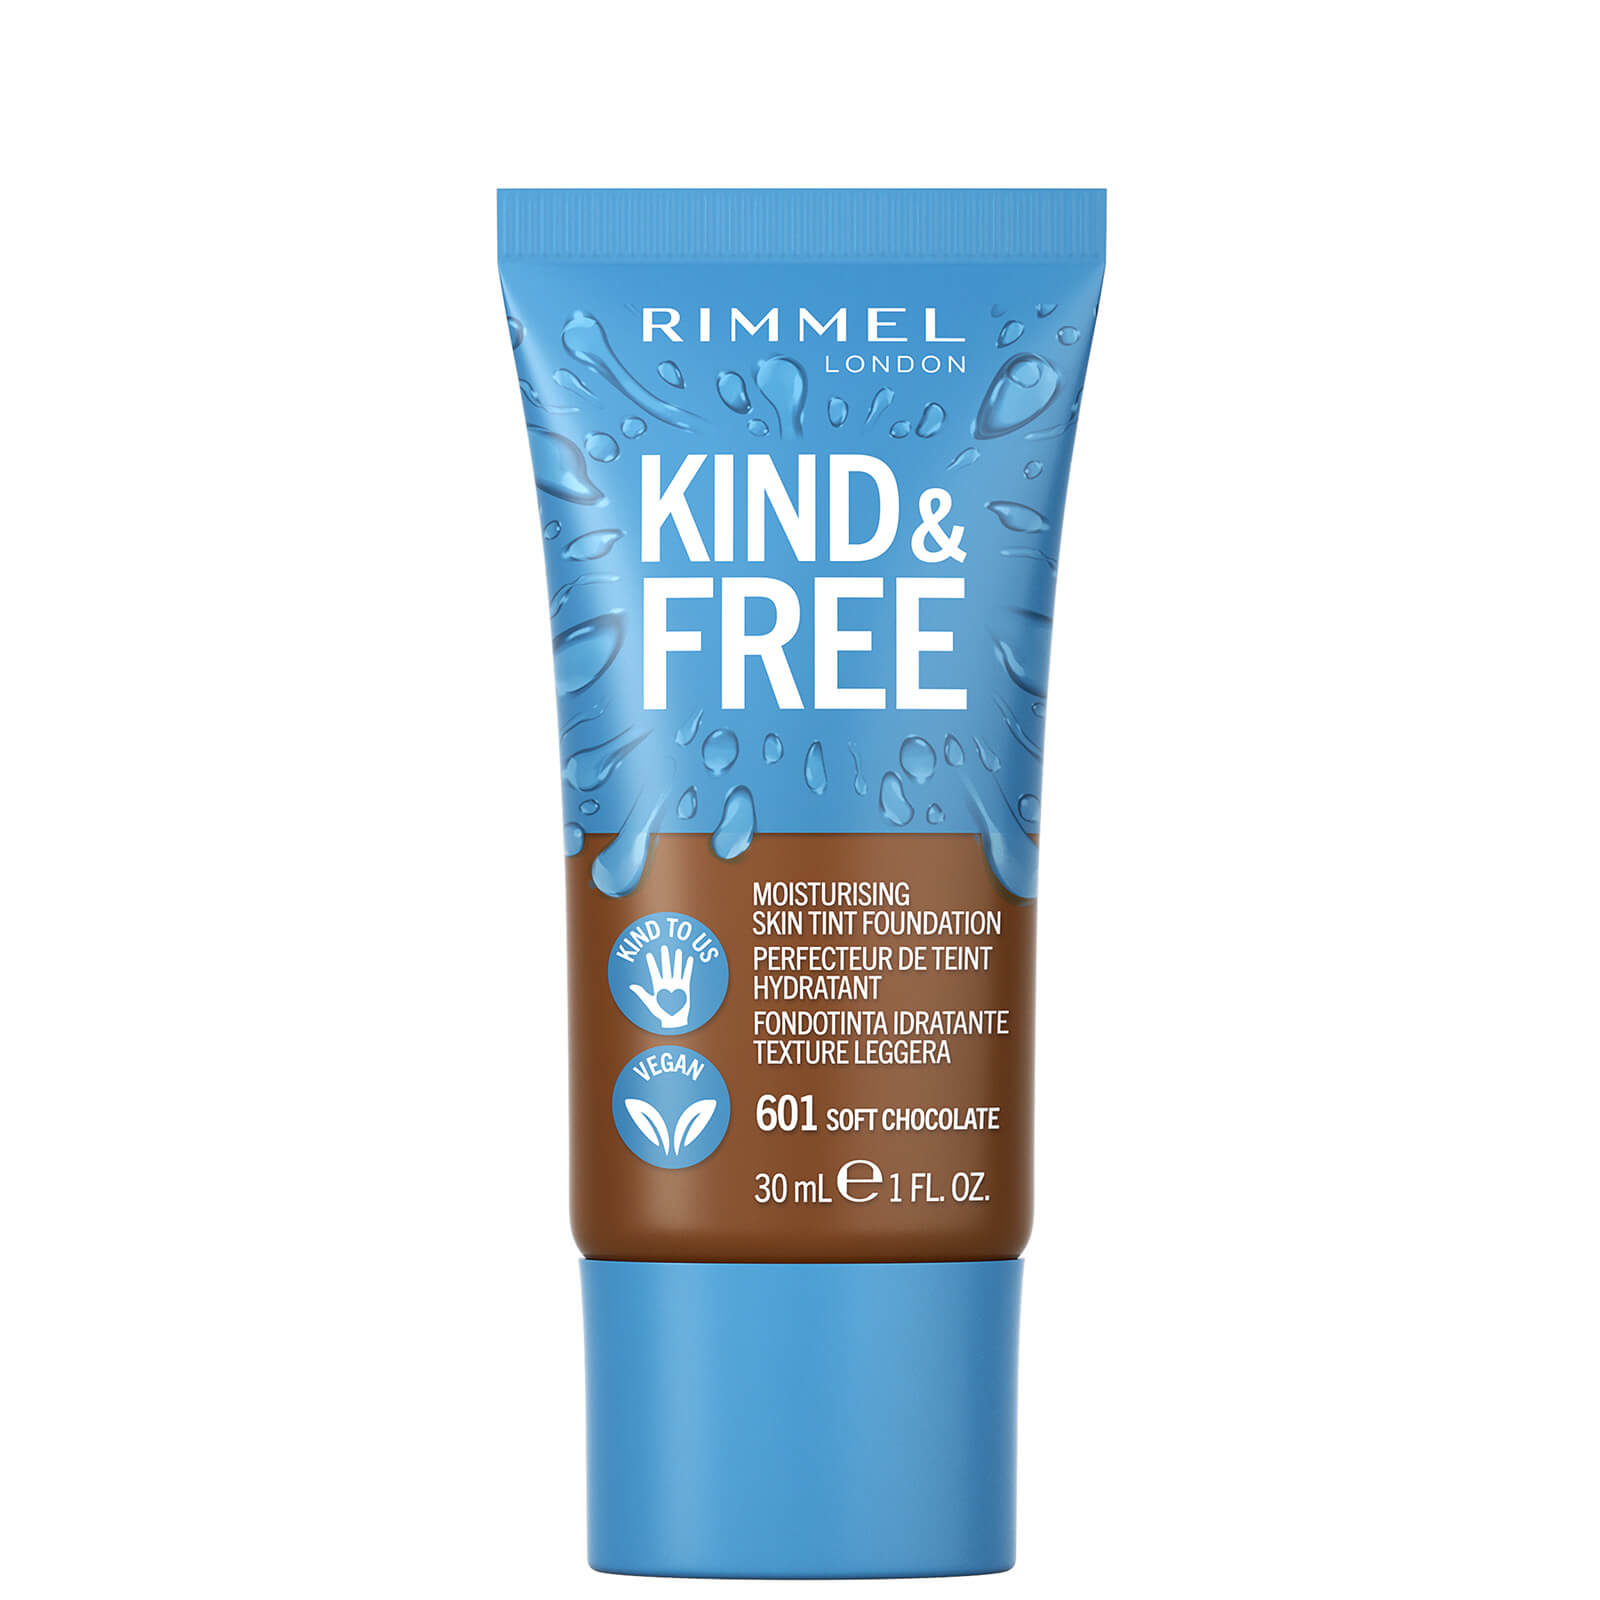 Rimmel Kind and Free Skin Tint Moisturising Foundation 30ml (Various Shades) - Soft Chocolate